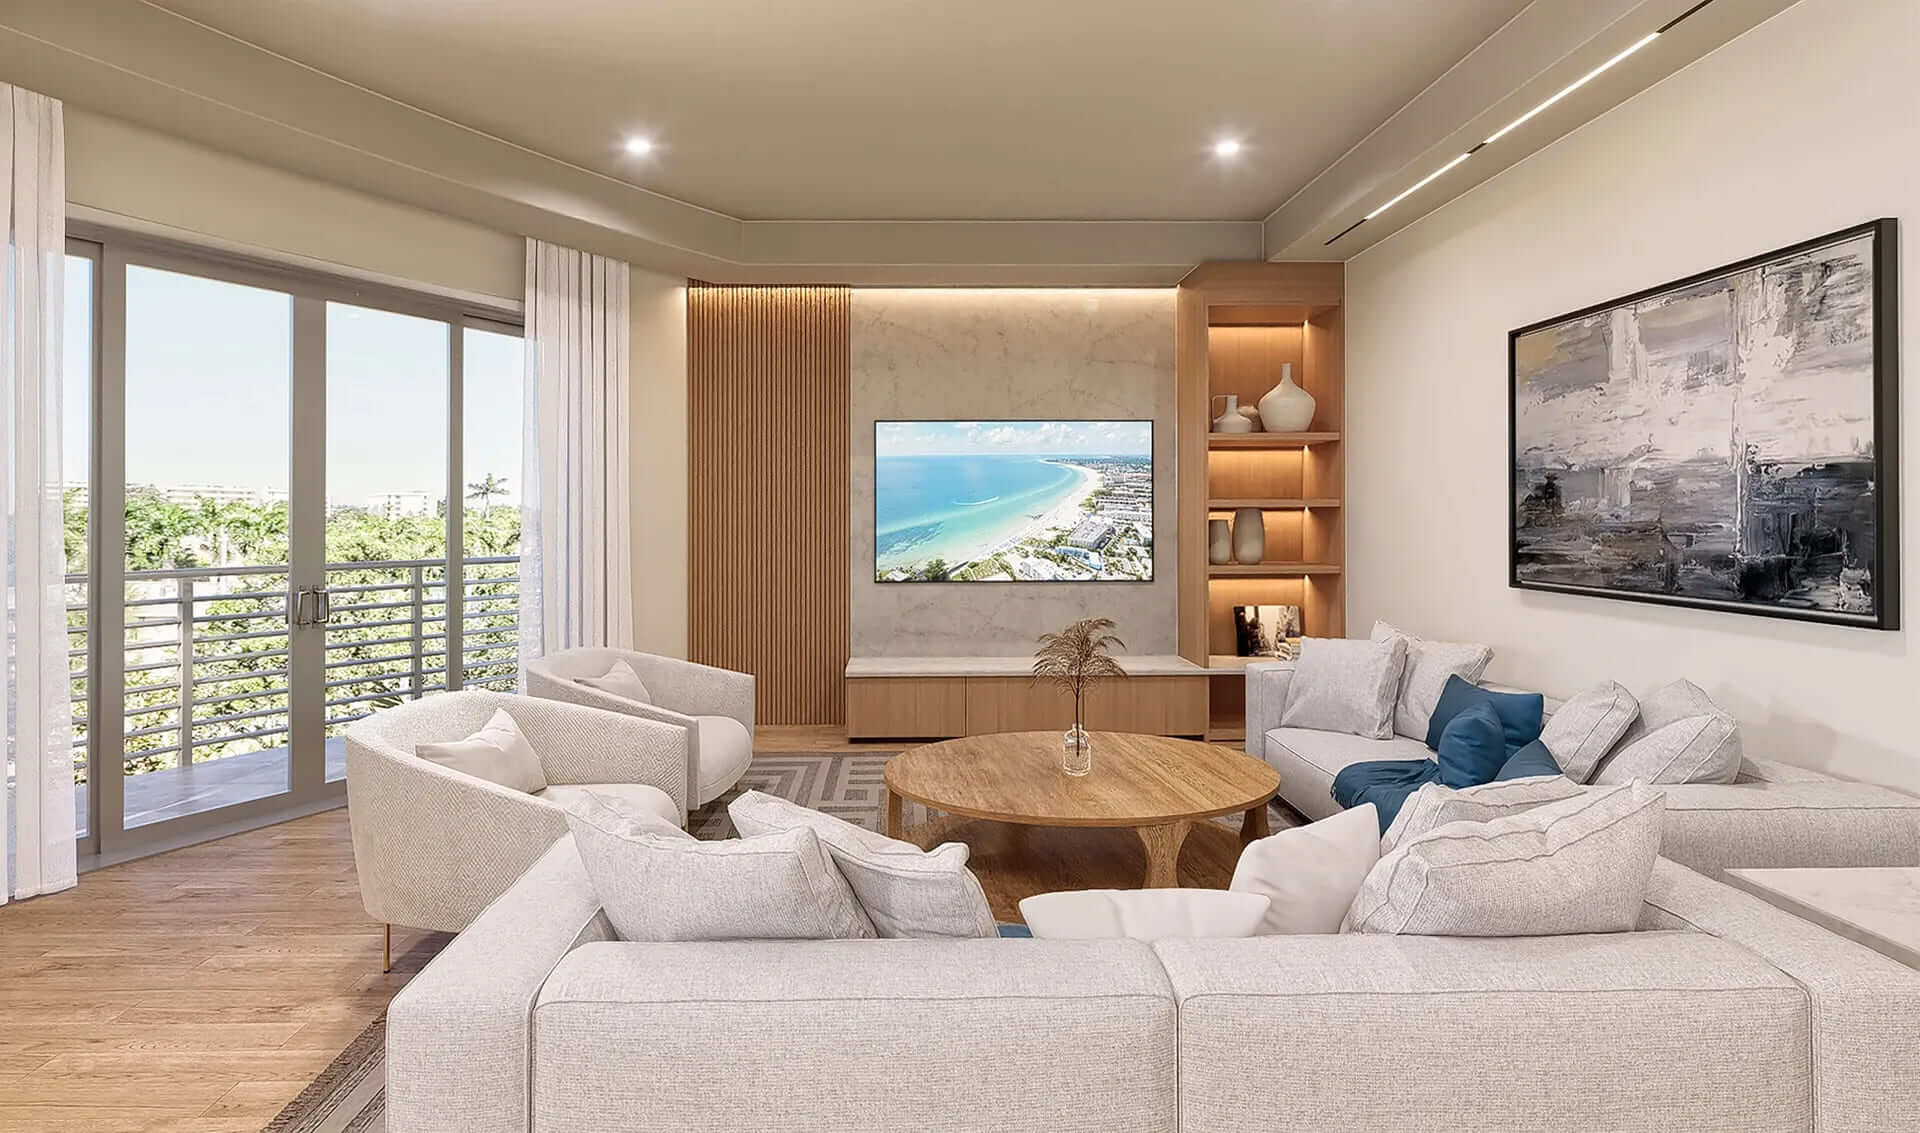 Siesta Key Azure Florida unit 400 - luxury apartment